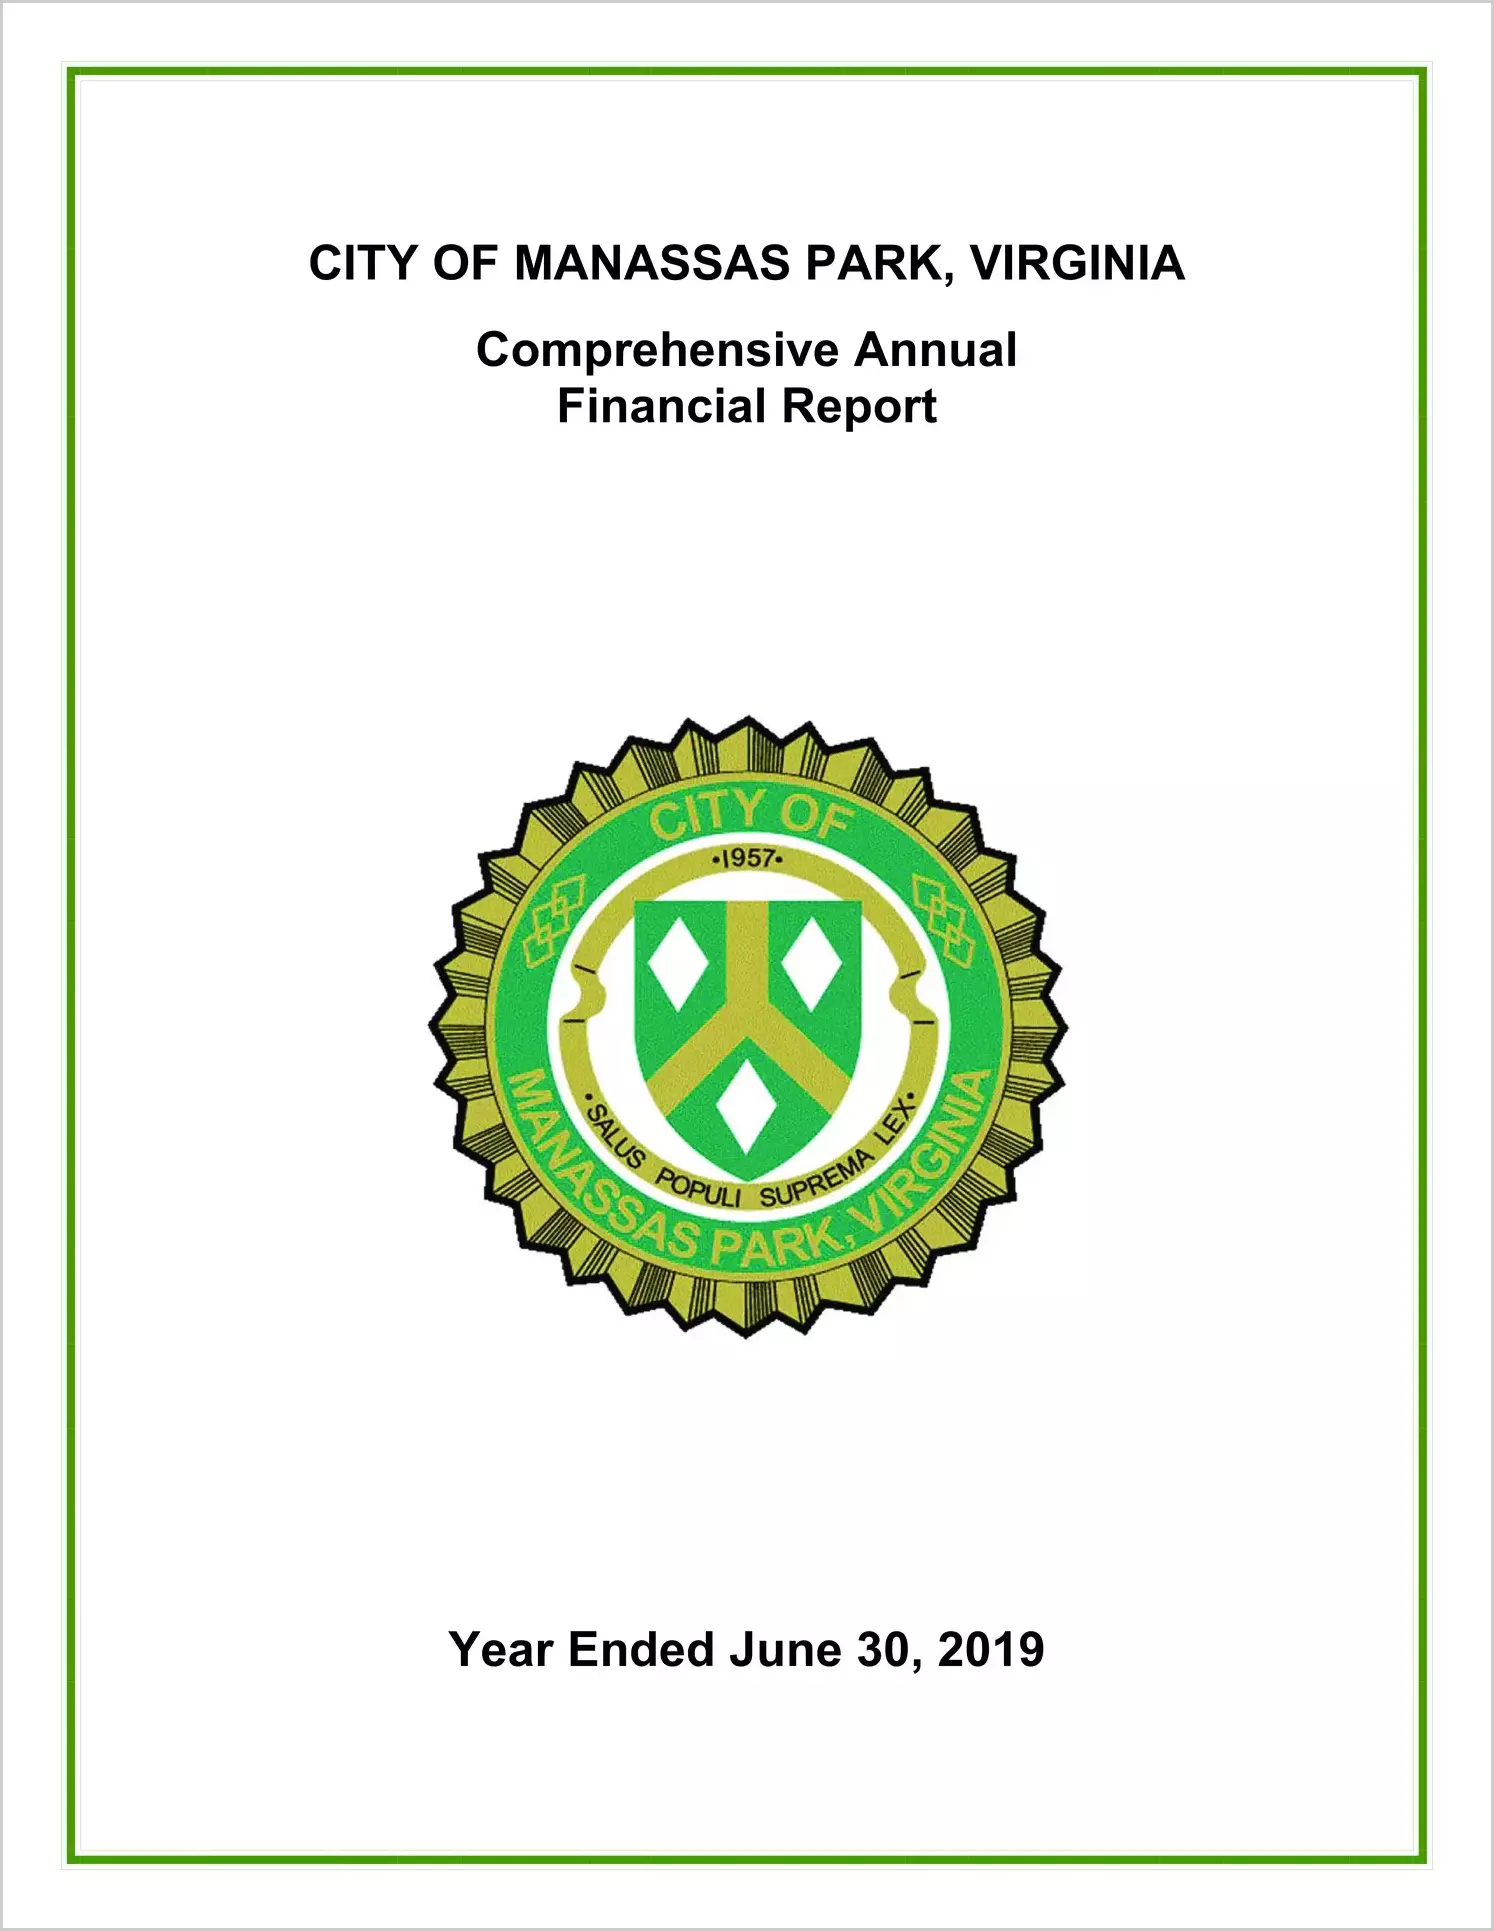 2019 Annual Financial Report for City of Manassas Park